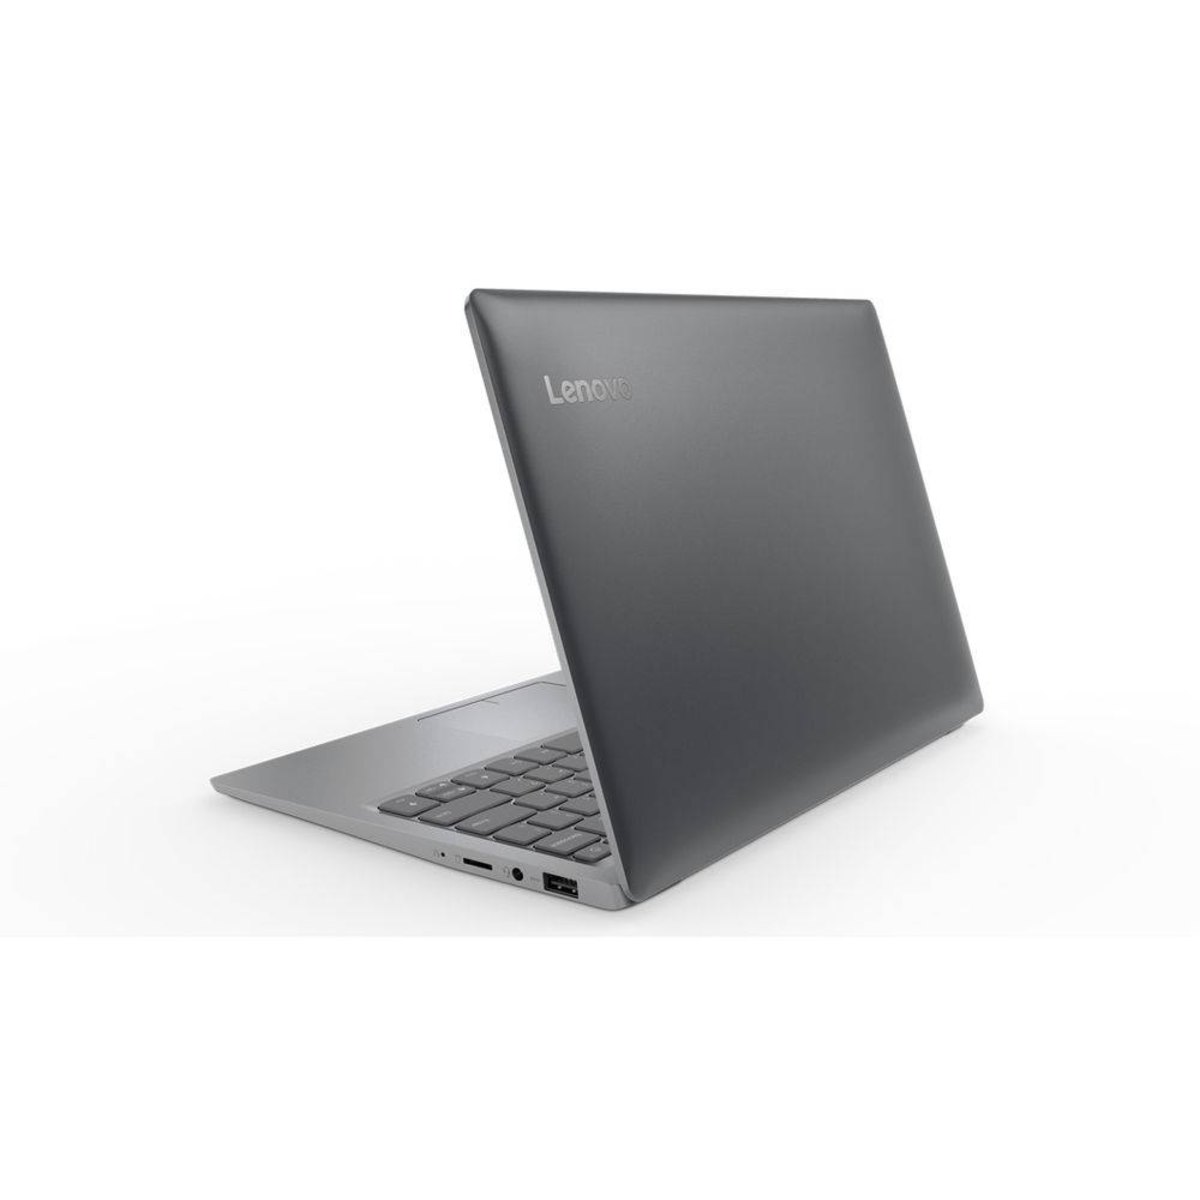 Notebook - Lenovo Celeron N3050 1.60ghz 2gb 32gb Ssd Intel Hd Graphics Windows 10 Home Ideapad 120s 11,6" Polegadas